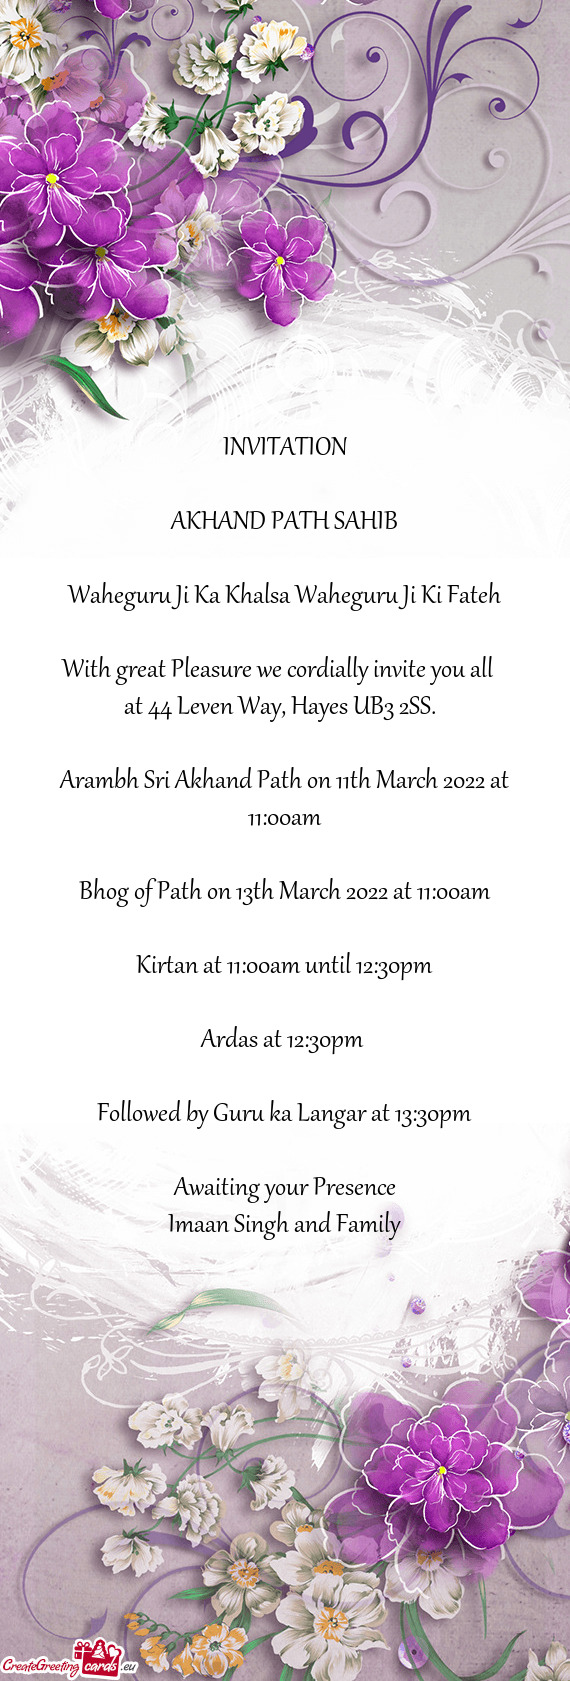 Arambh Sri Akhand Path on 11th March 2022 at 11:00am